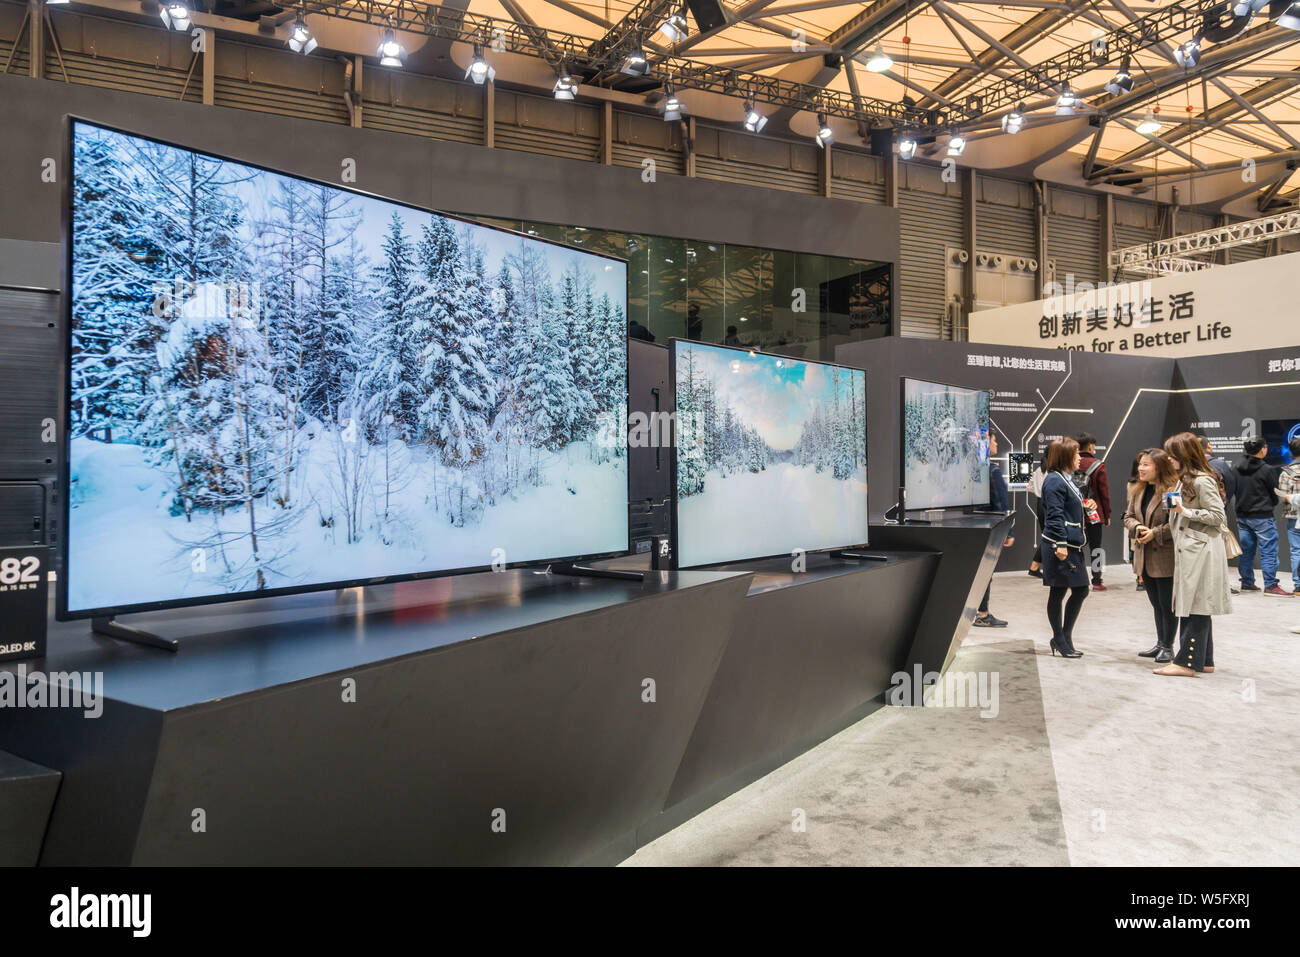 Samsung 8K QLED Fernseher sind auf dem Display während das Gerät &  Elektronik World Expo 2019 AWE (2019) in Shanghai, China, 14. März 2019  Stockfotografie - Alamy